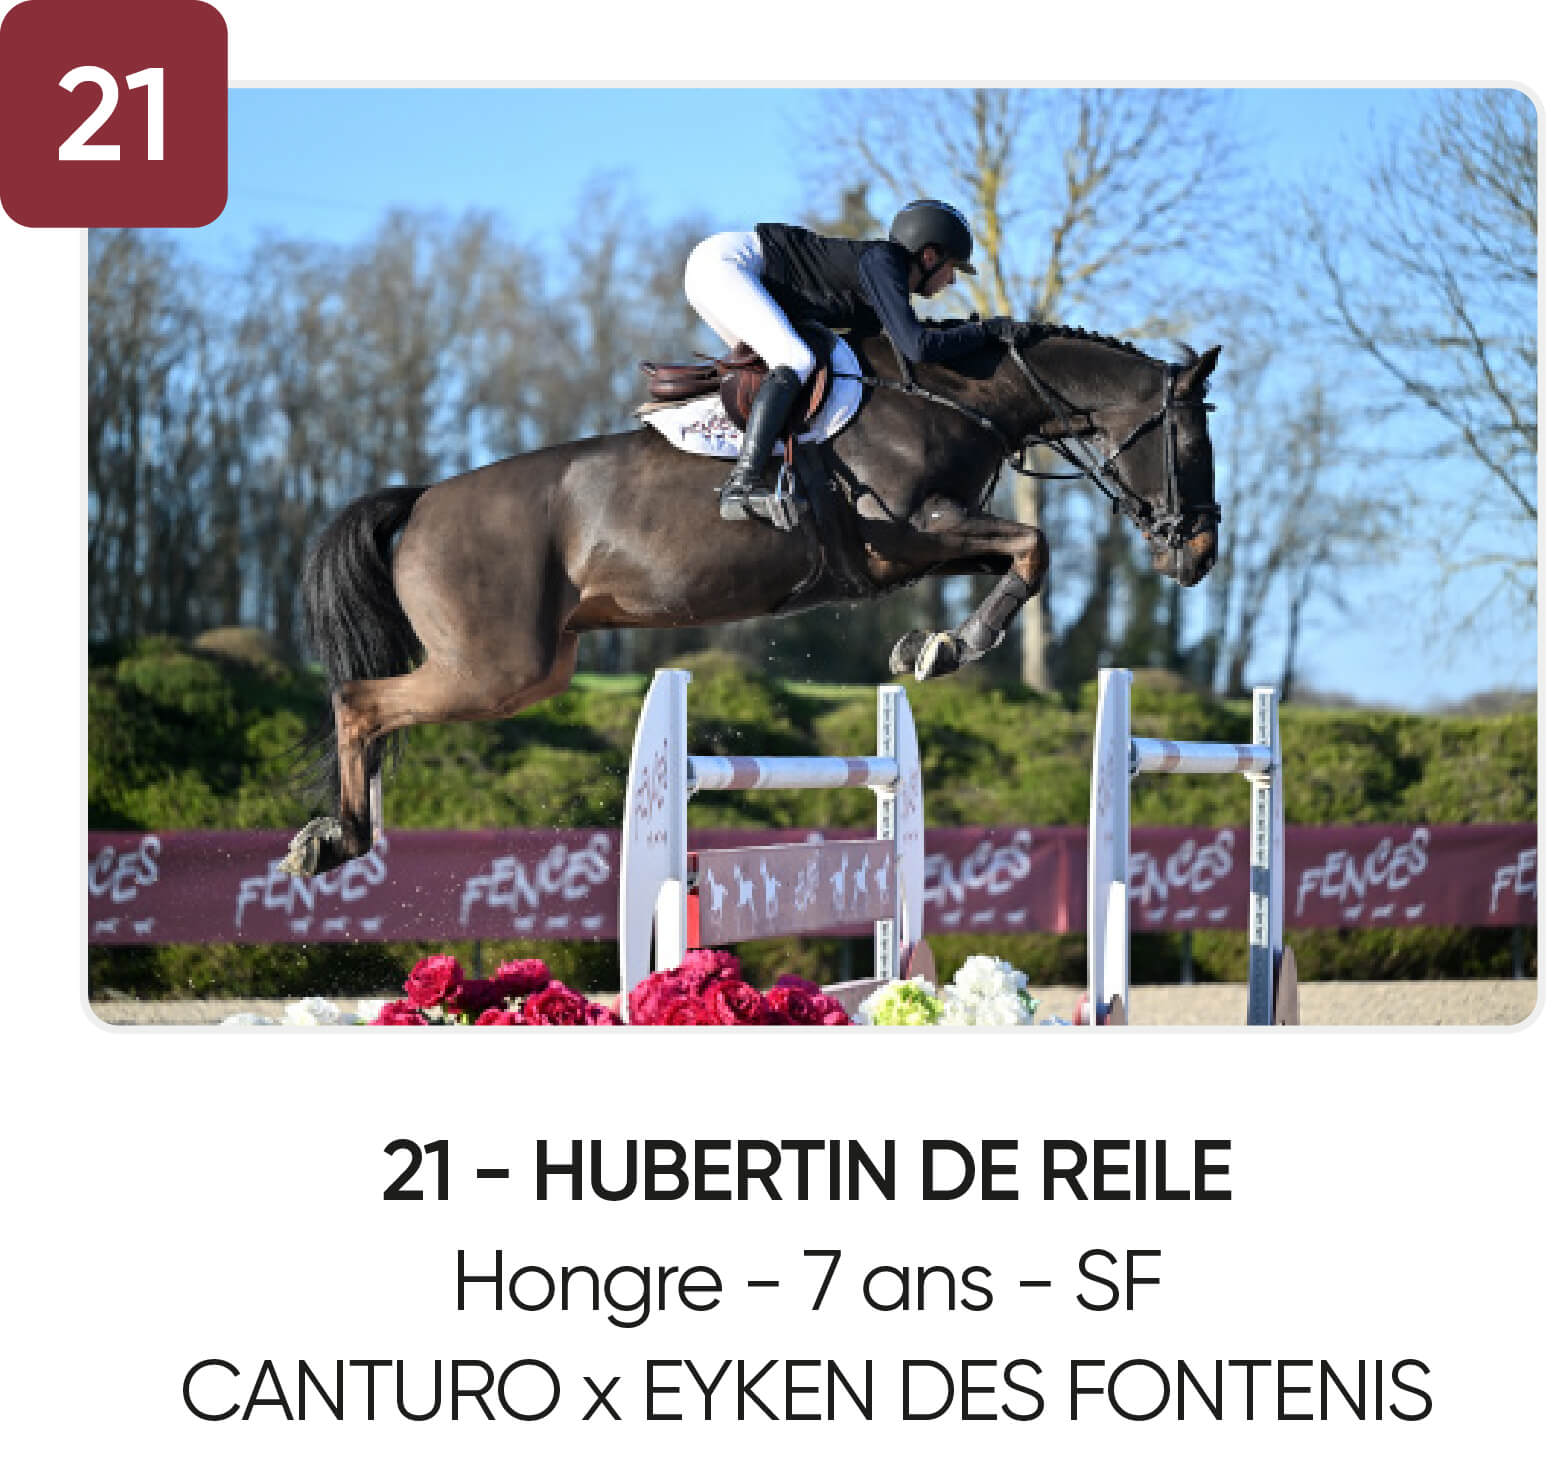 21 - HUBERTIN DE REILE